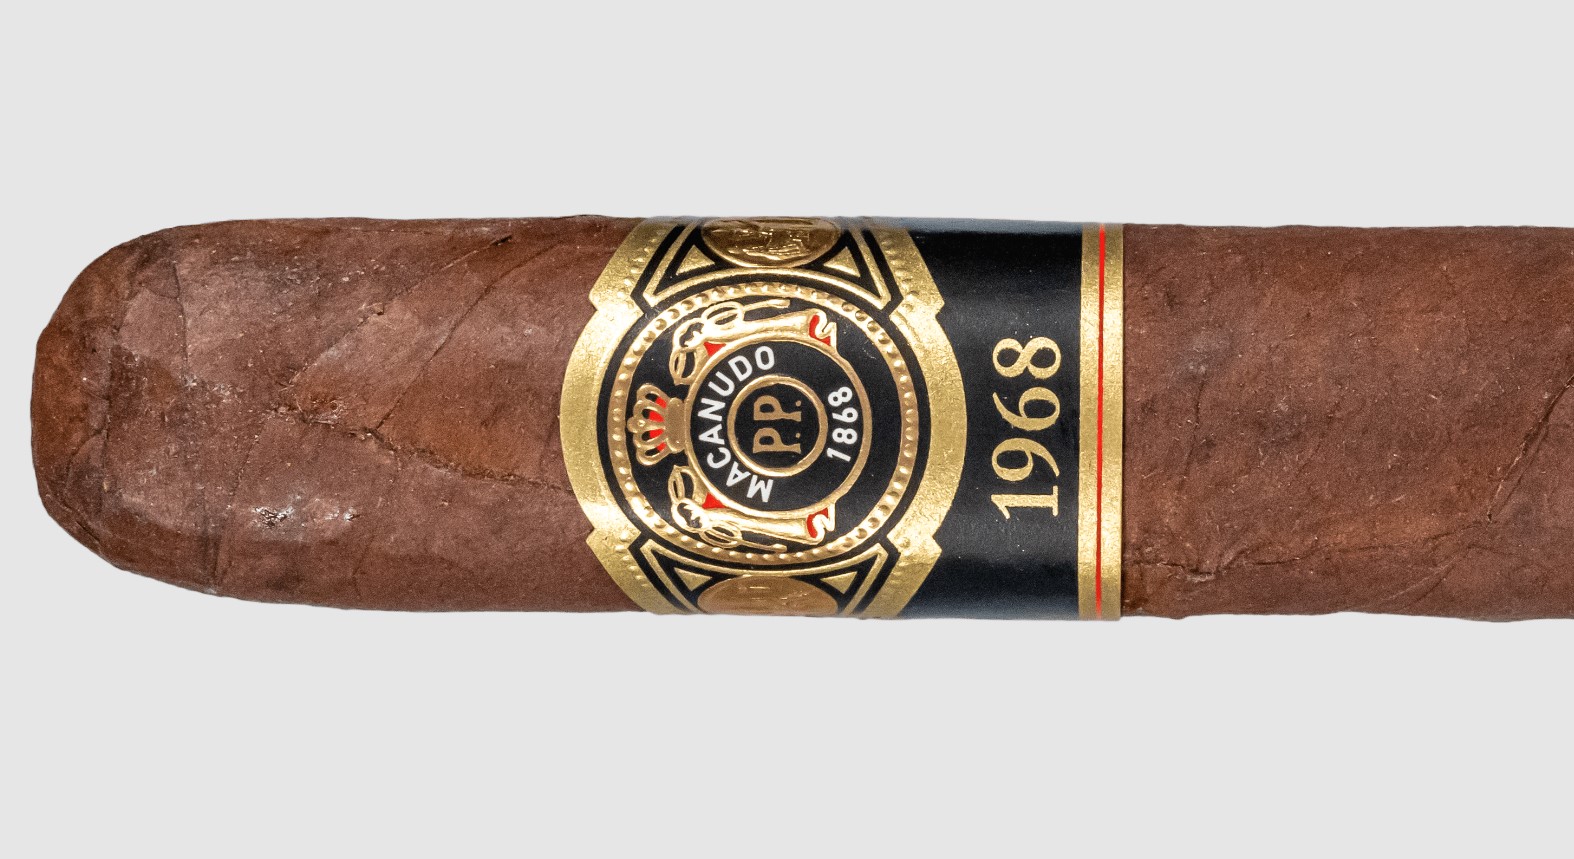 Macanudo Cigars – Brand Overview 3